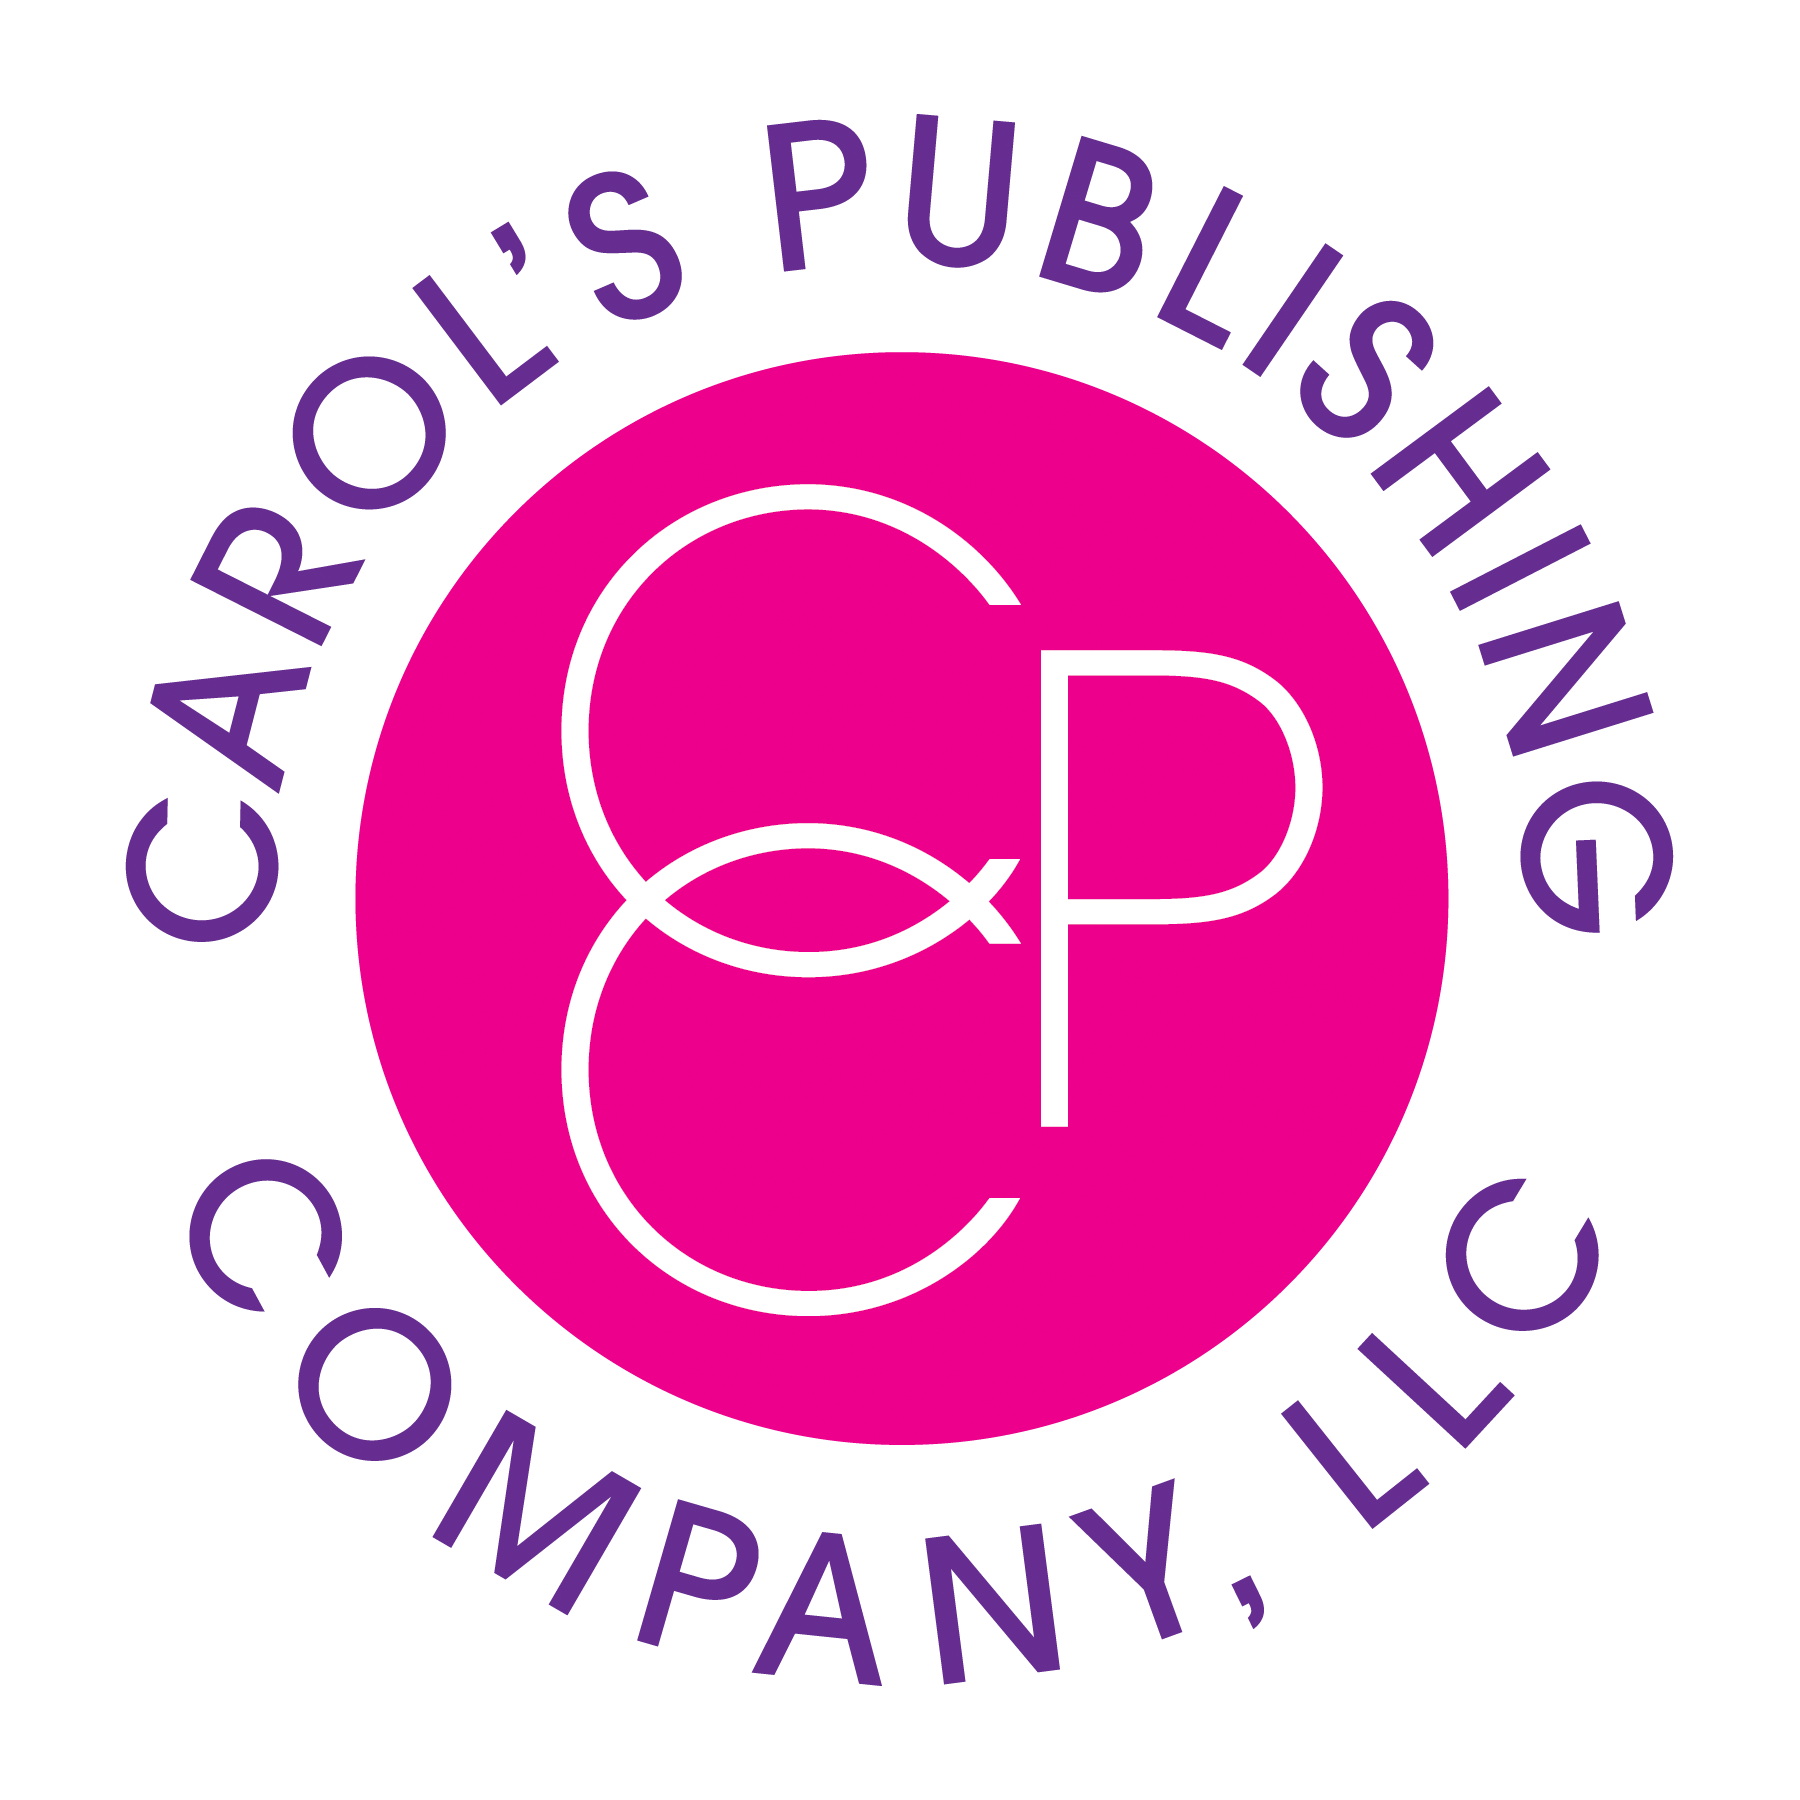 Carol's Publishing Company LLC